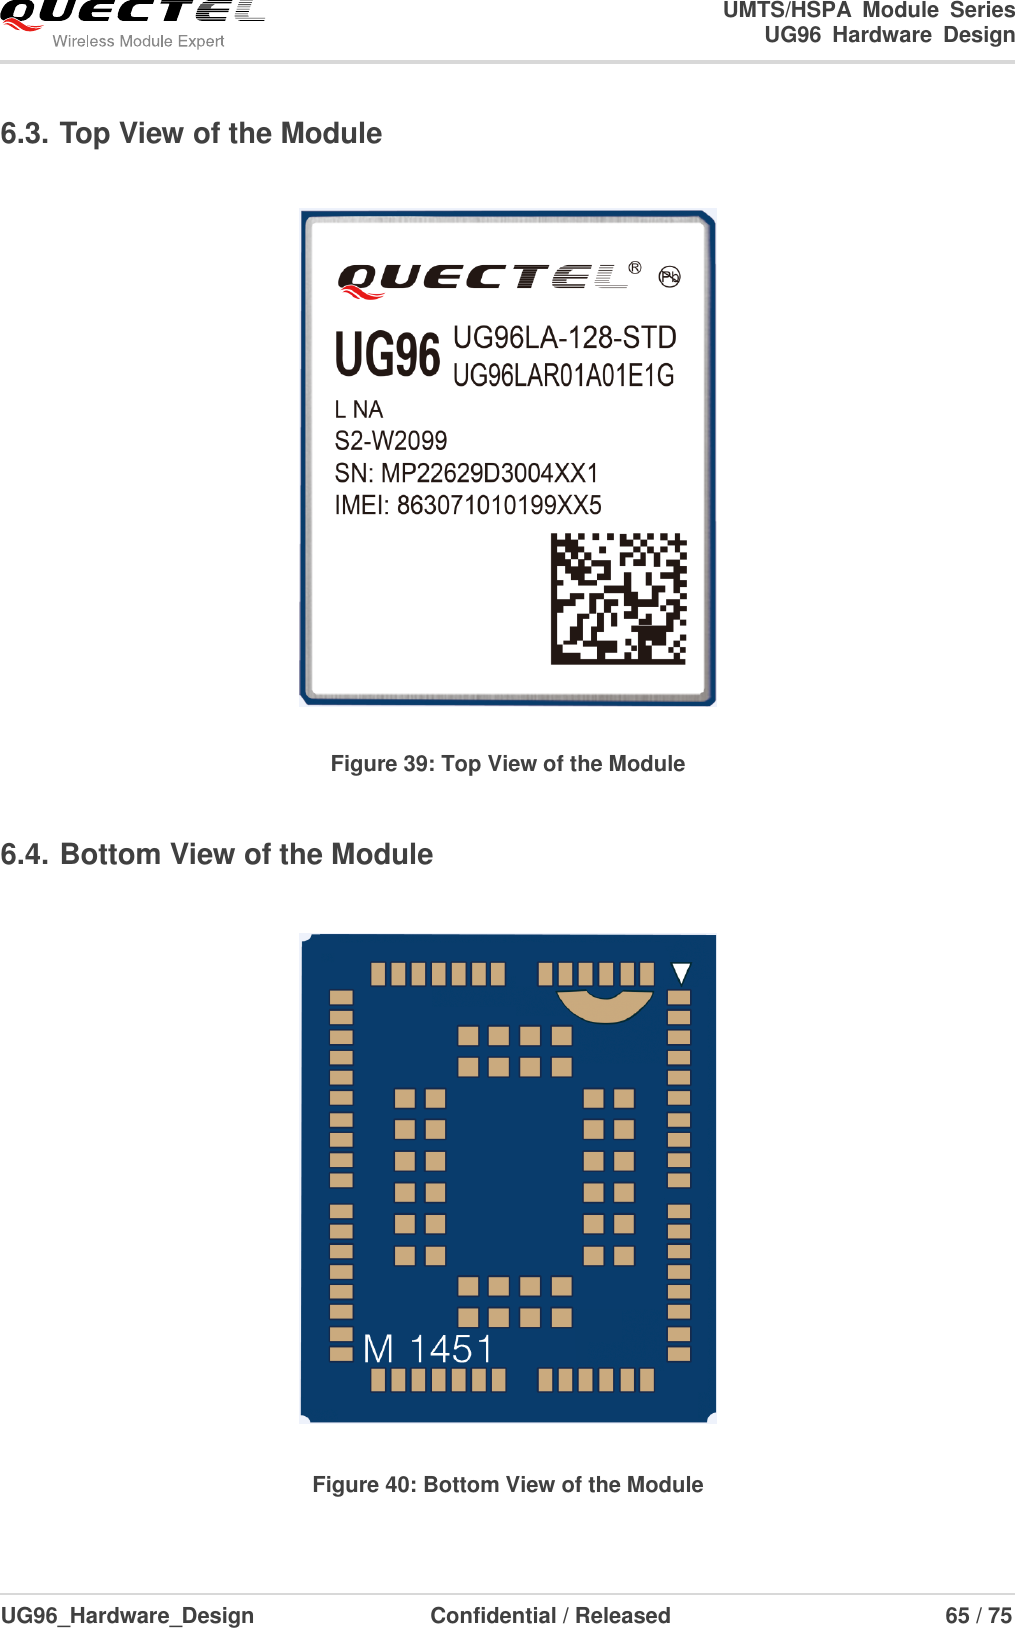                                                                        UMTS/HSPA  Module  Series                                                                 UG96  Hardware  Design  UG96_Hardware_Design                  Confidential / Released                             65 / 75    6.3. Top View of the Module   Figure 39: Top View of the Module 6.4. Bottom View of the Module   Figure 40: Bottom View of the Module 